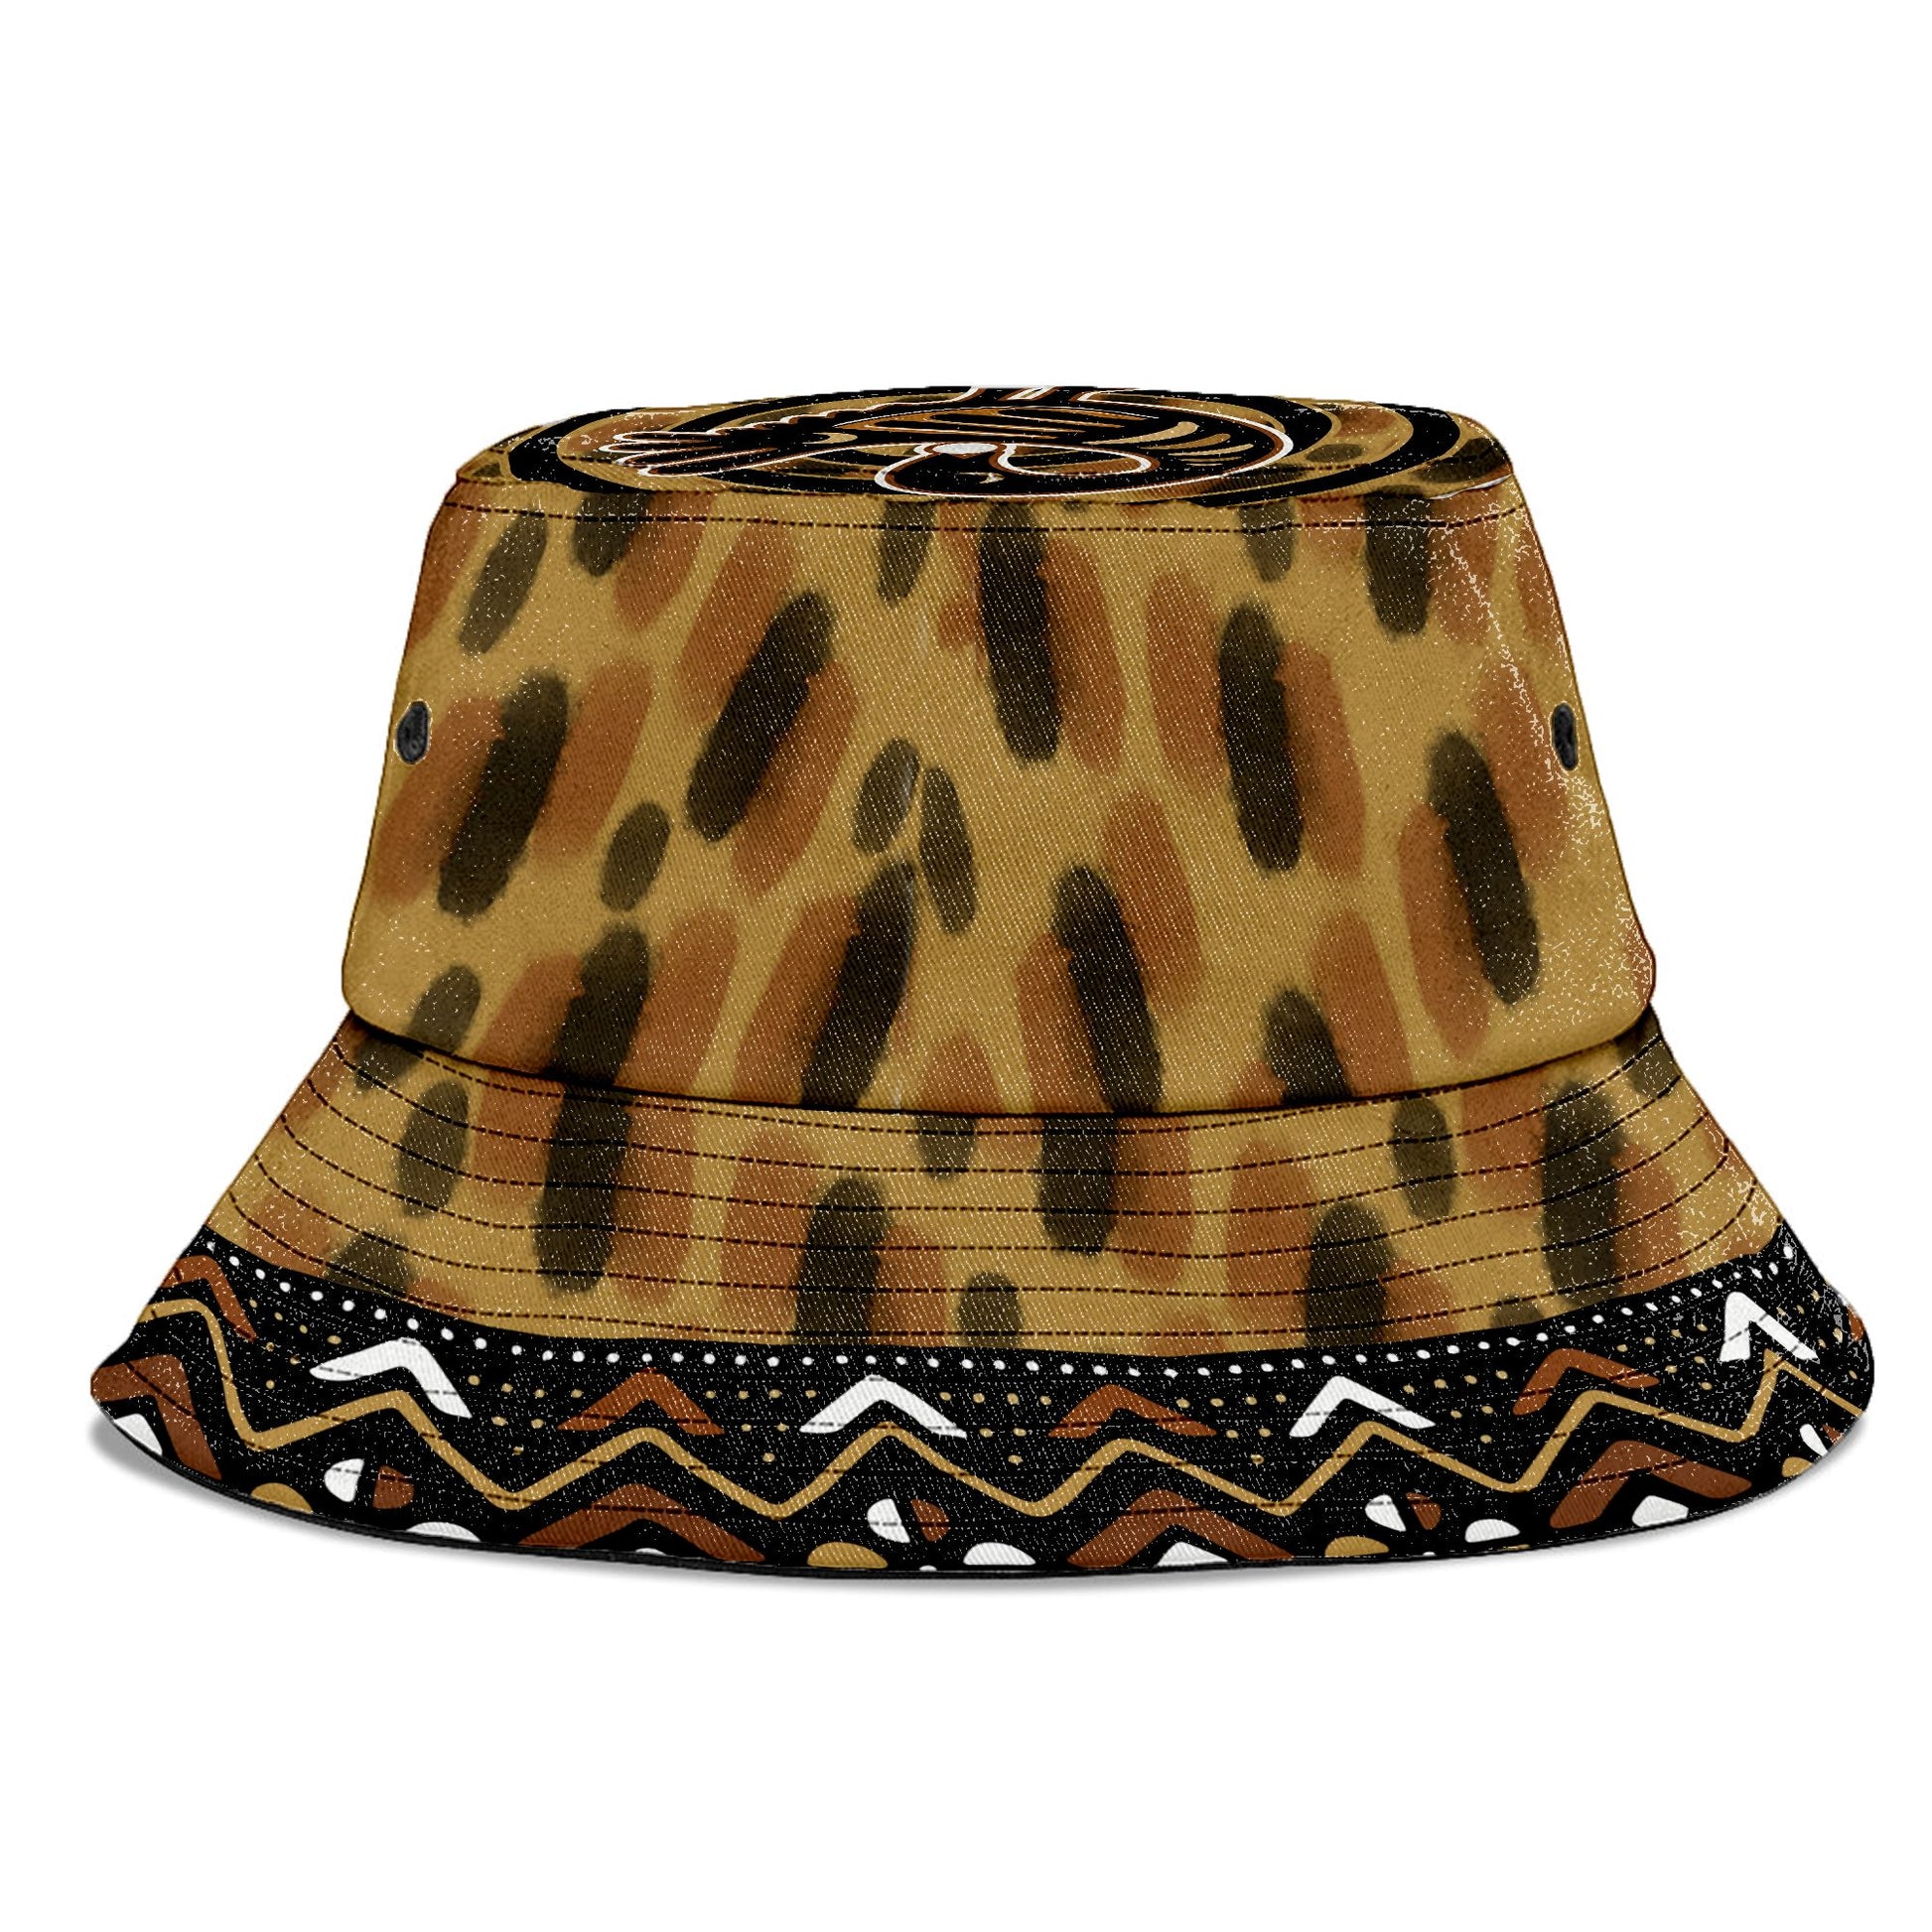 Printed Mud Cloth and Adinkra Symbol Bucket Hat Bucket Hat Tianci 